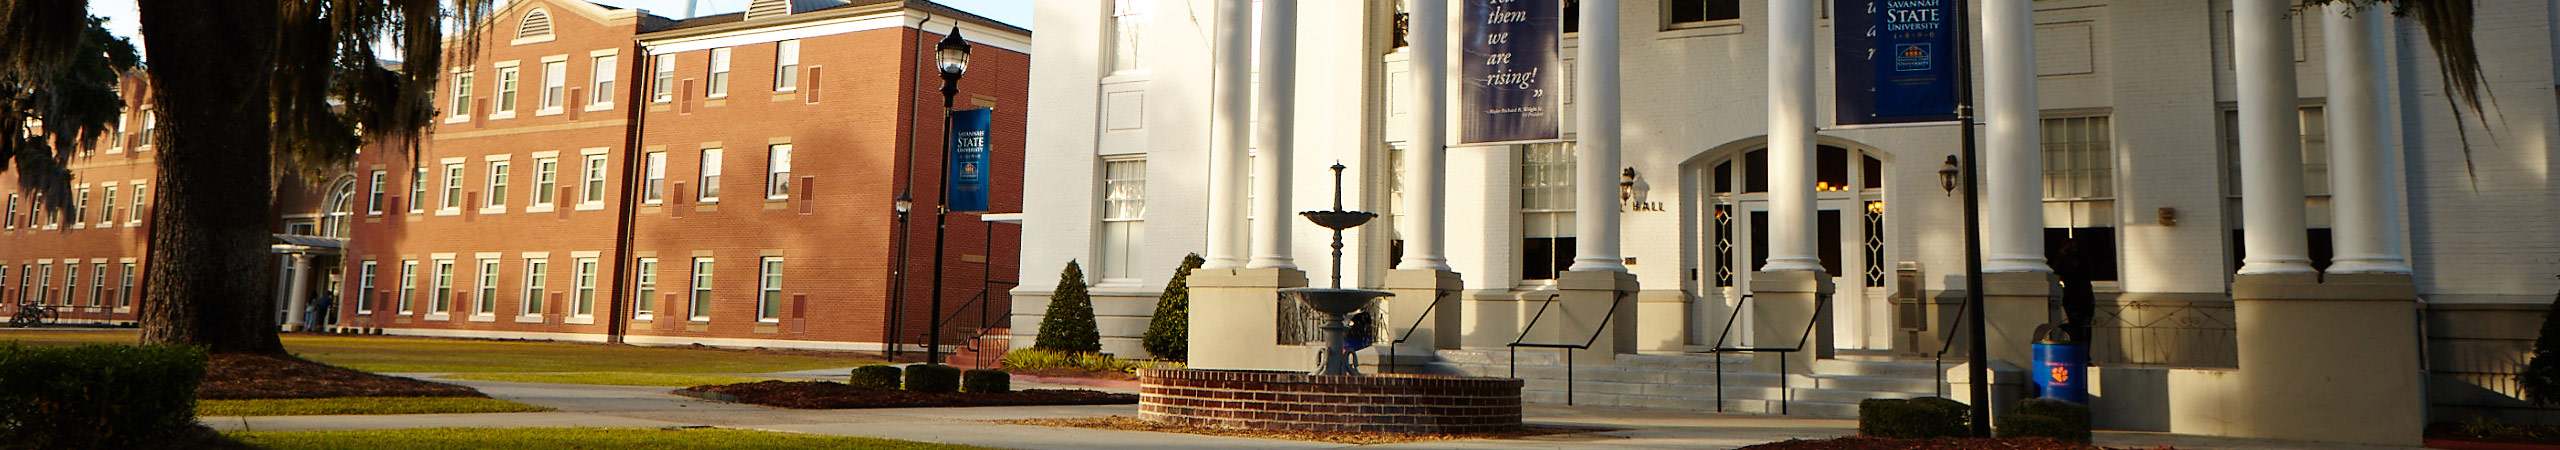 Savannah State University's Hill Hall